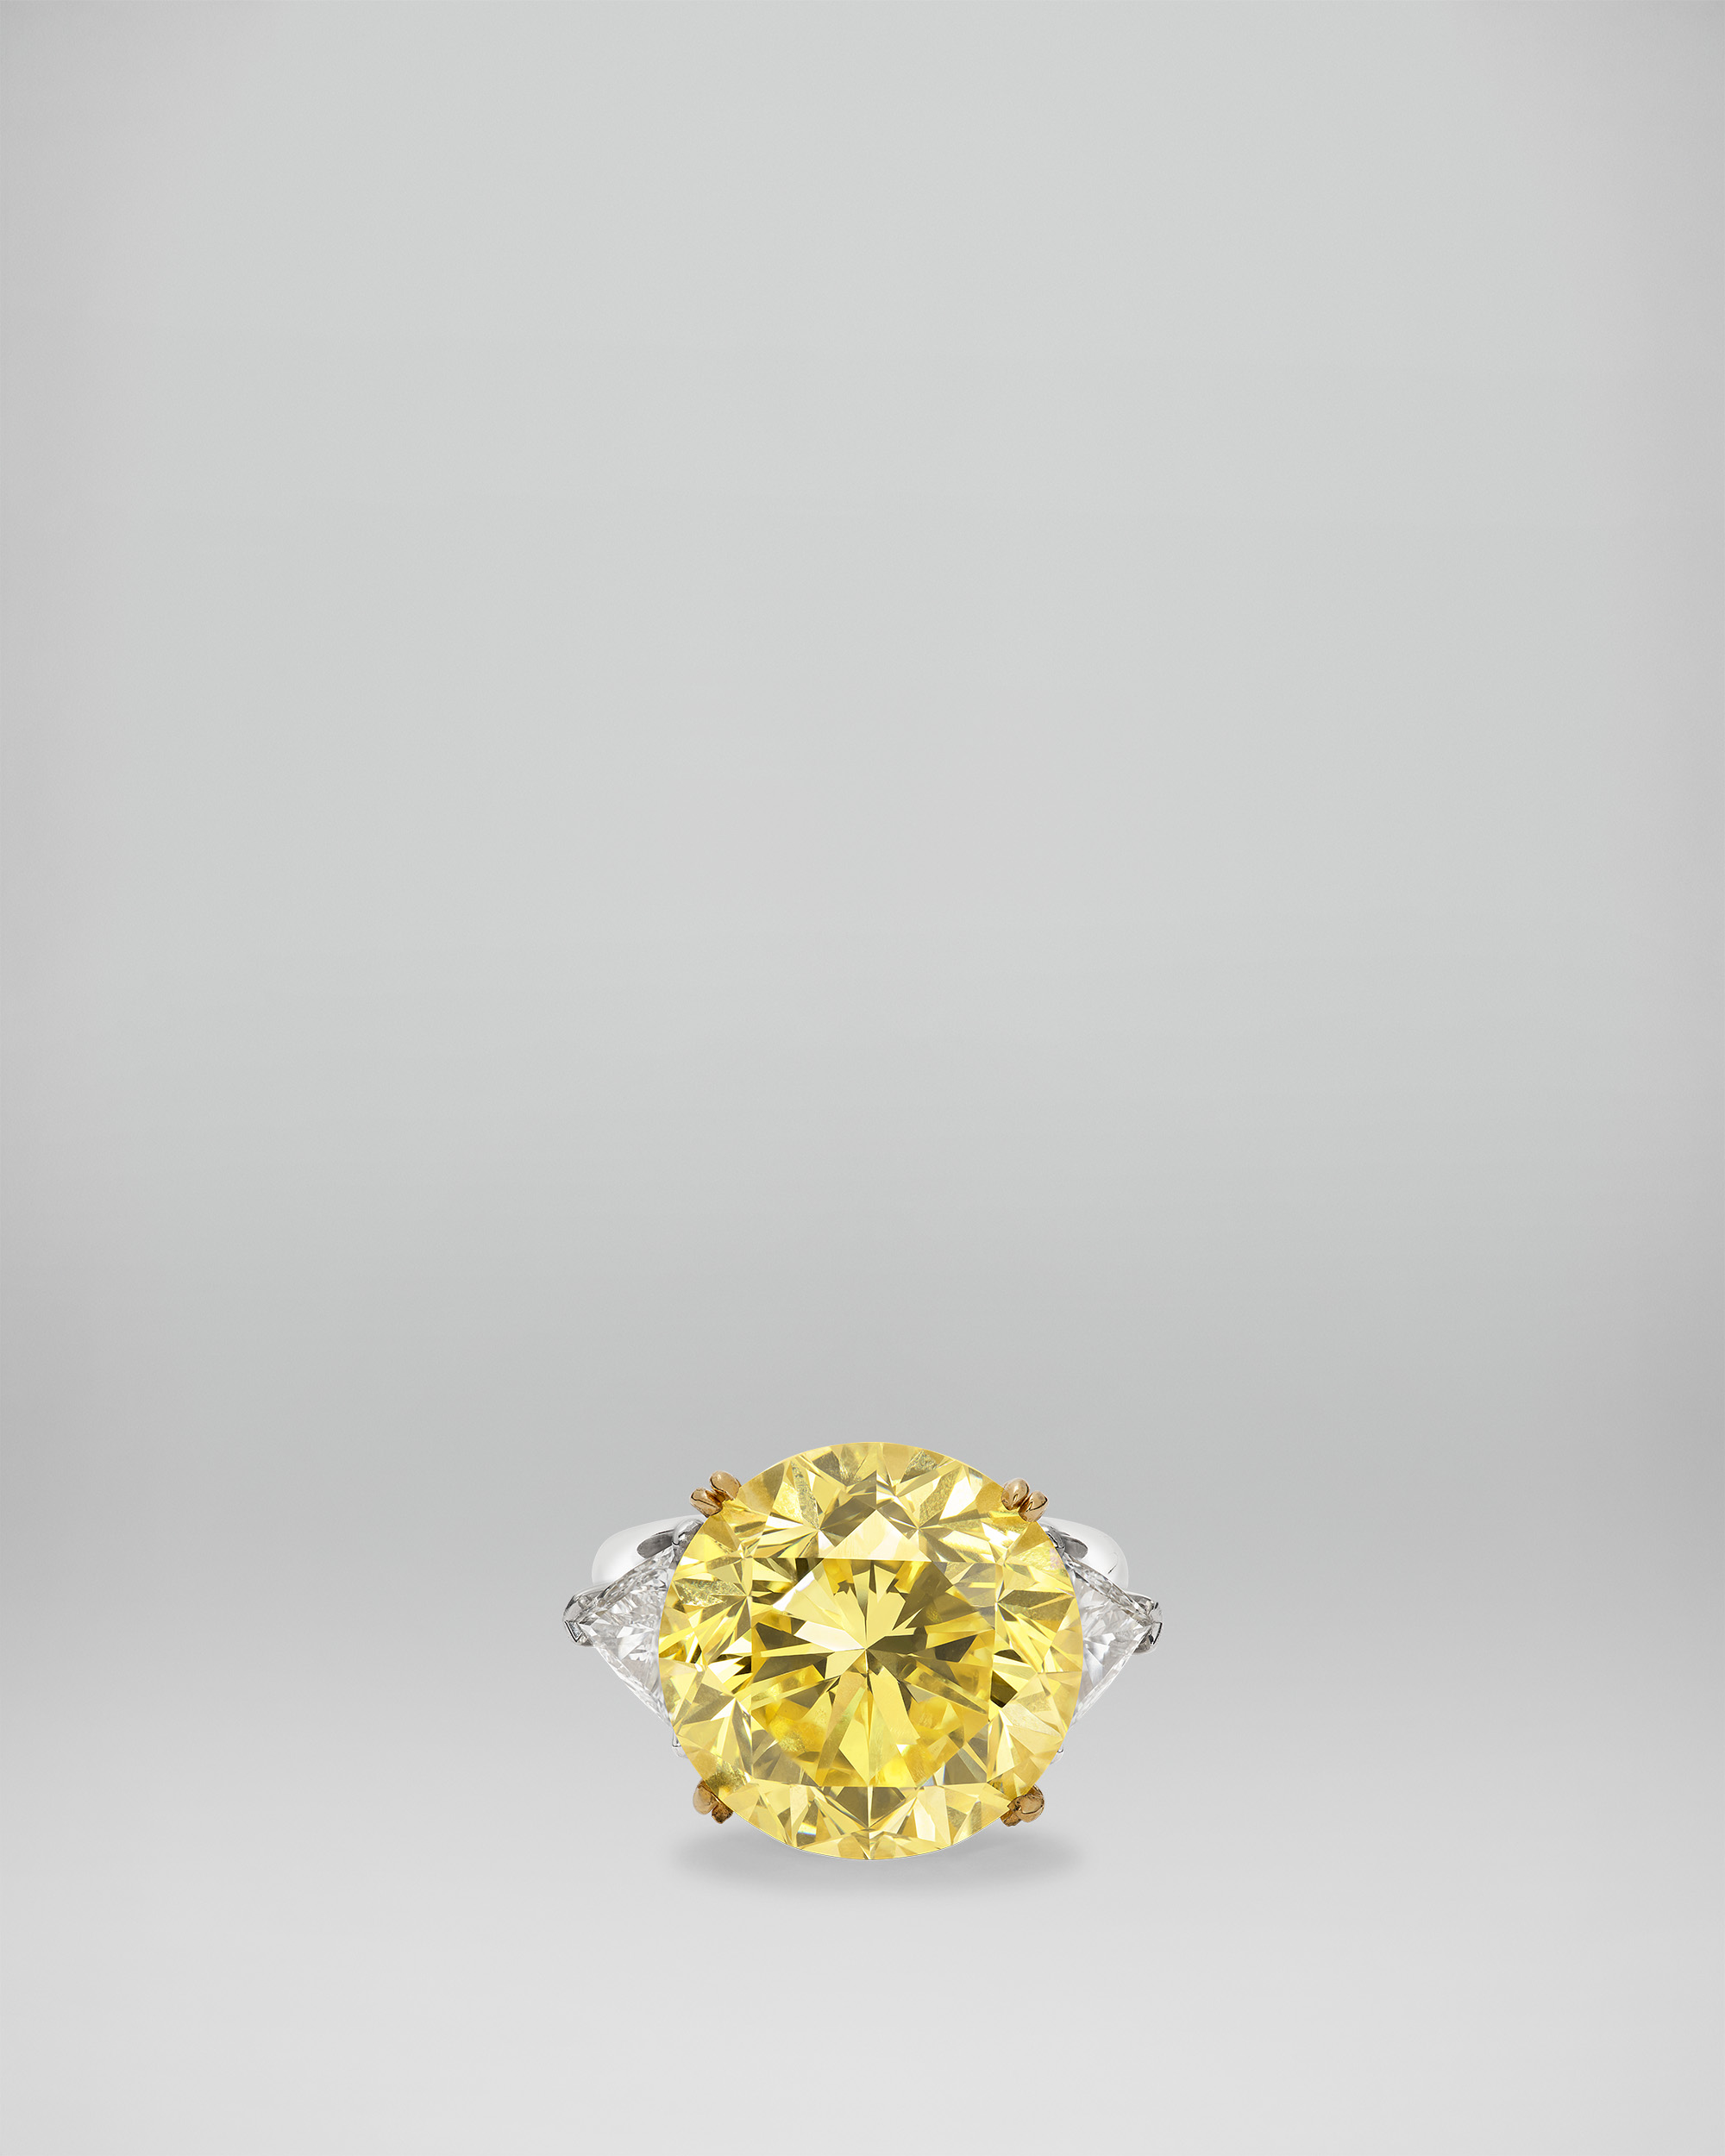 Fancy Vivid Yellow Round Brilliant Cut Diamond and White Diamond 